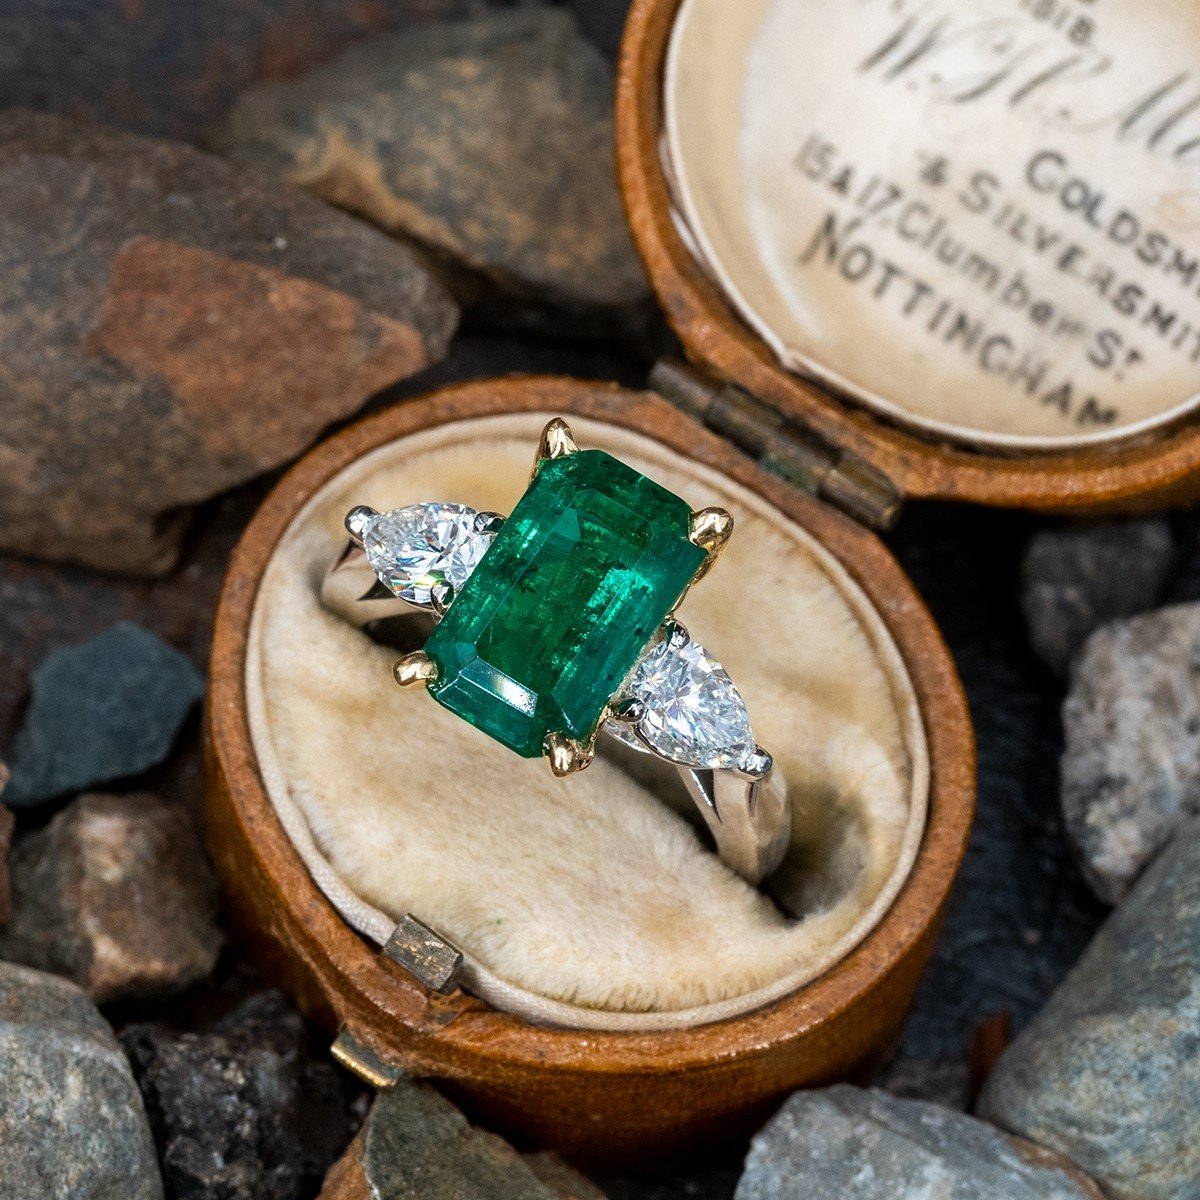 Stunning 5.4 Carat Emerald Ring w/ Pear Diamond Accents